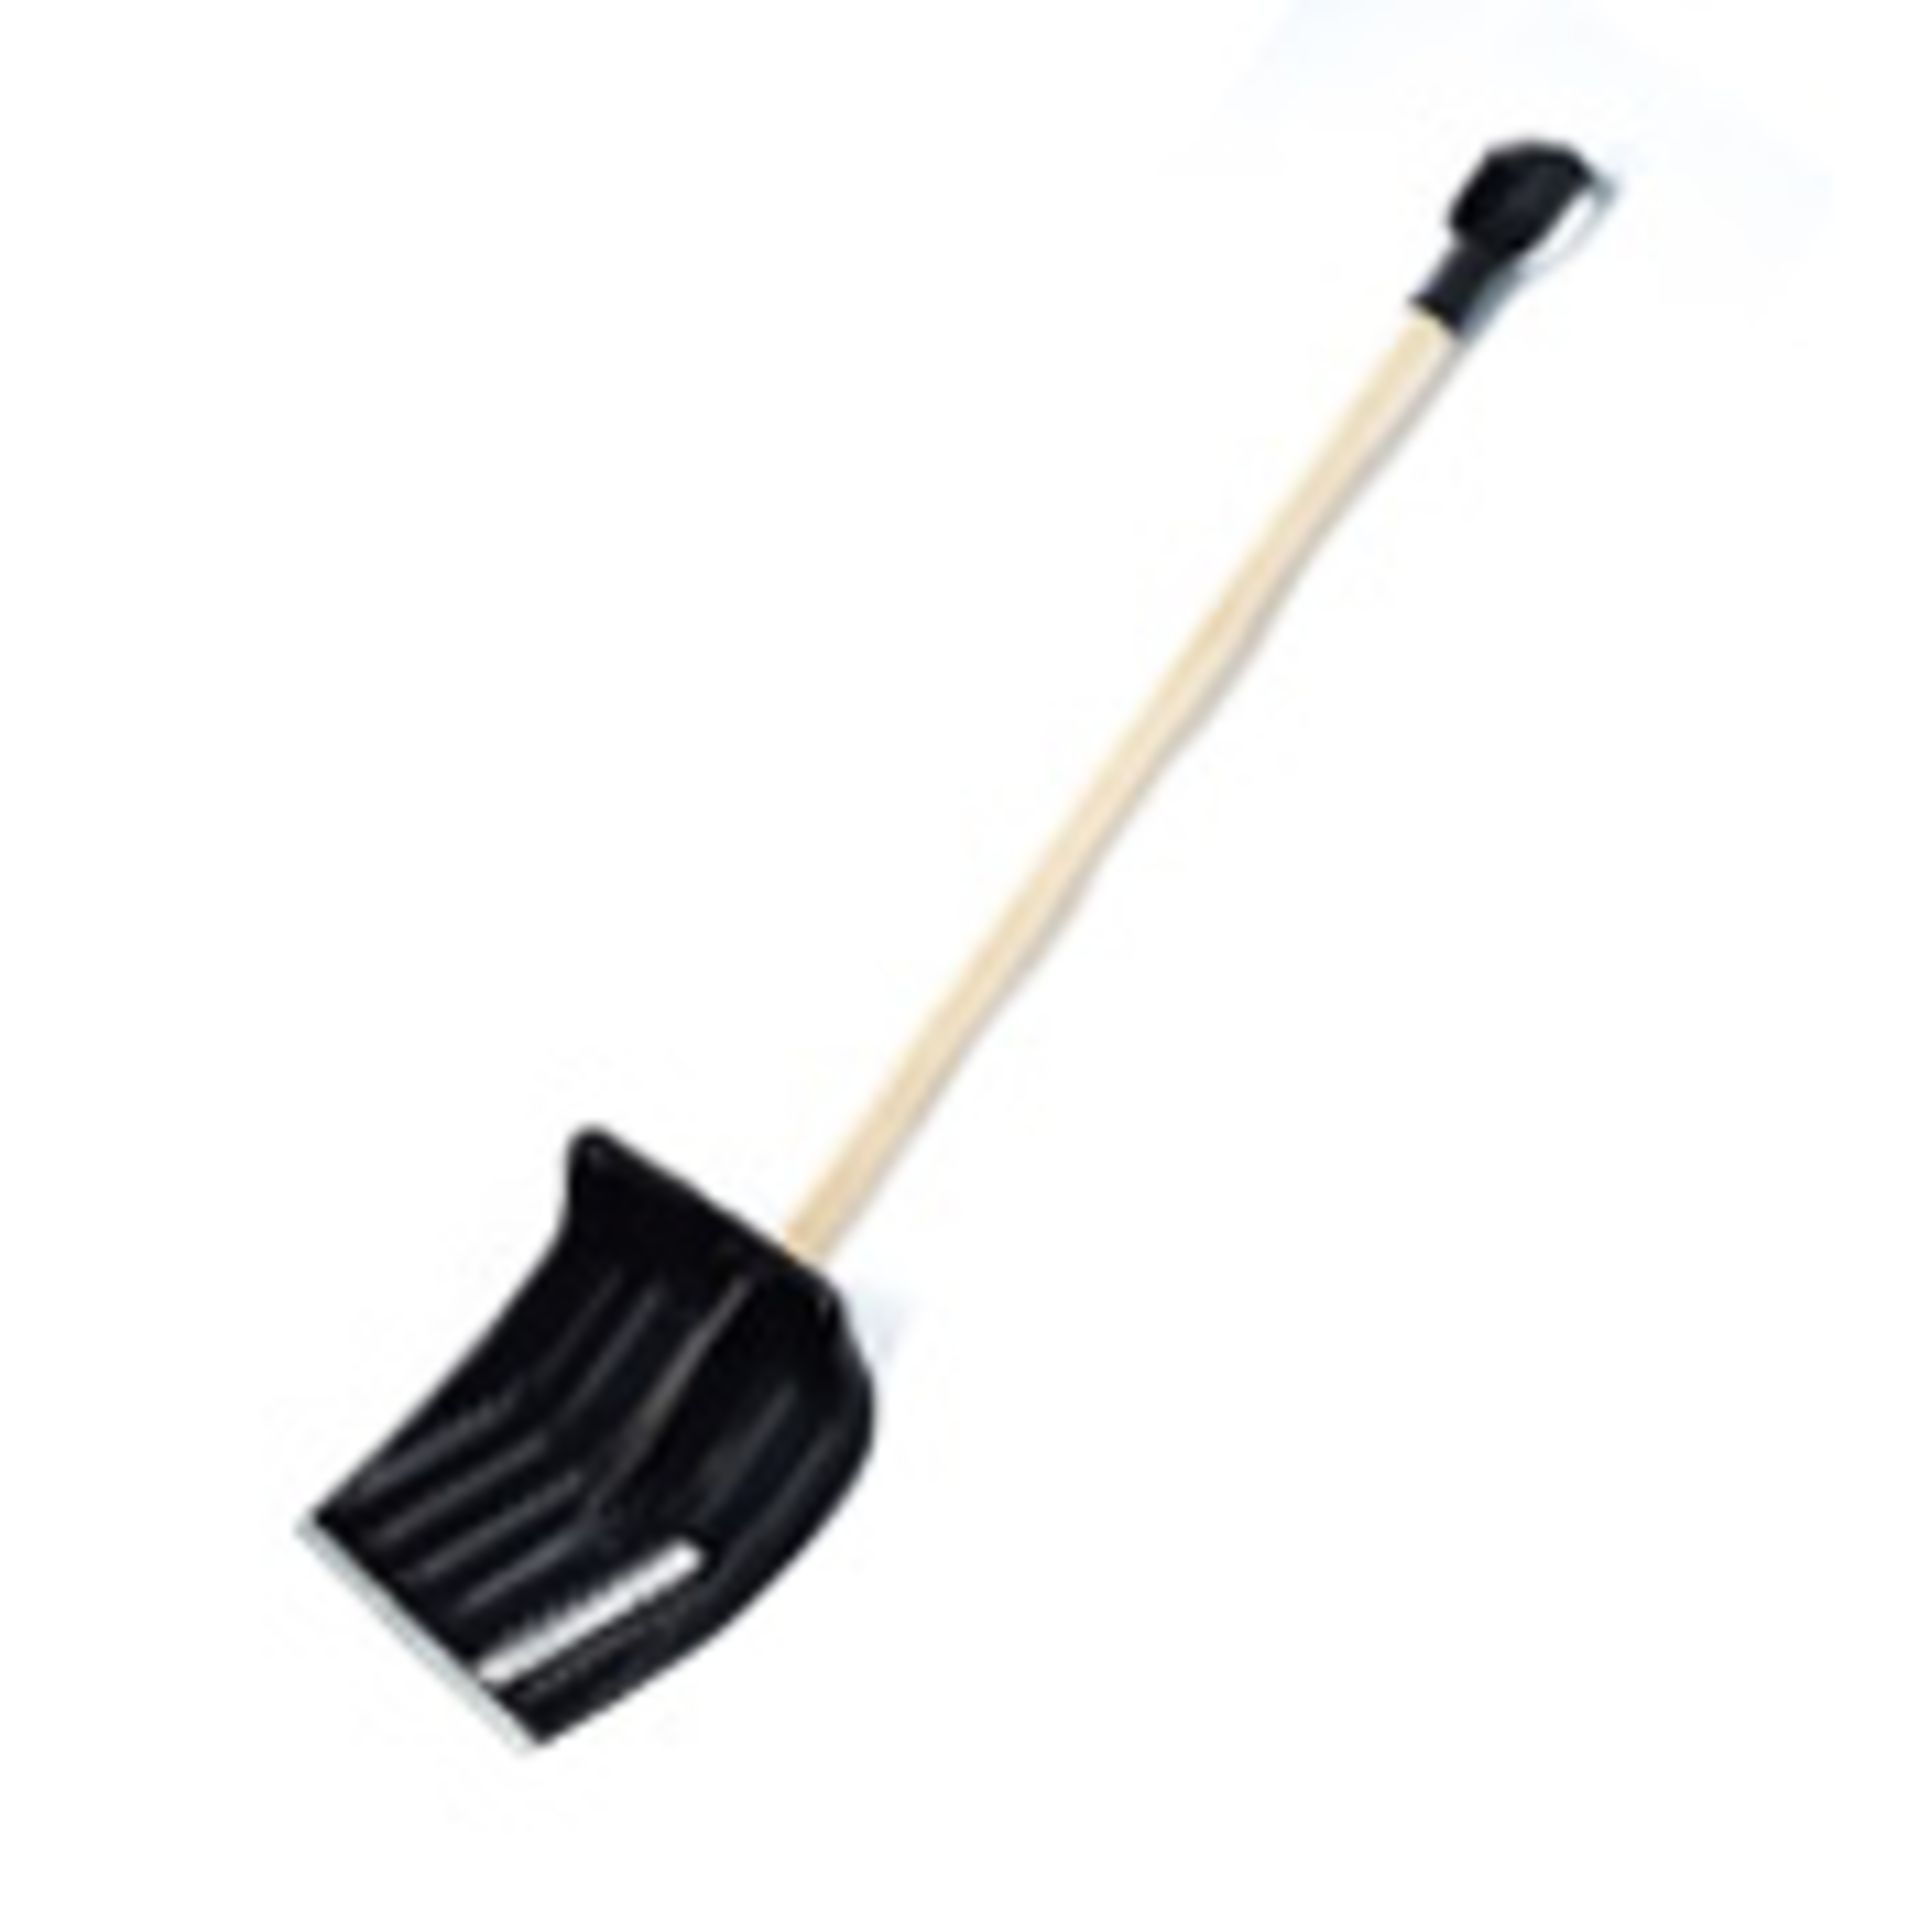 100 x Aleco 47 Black Multi Purpose Shovel with Metal Edge - Image 2 of 2